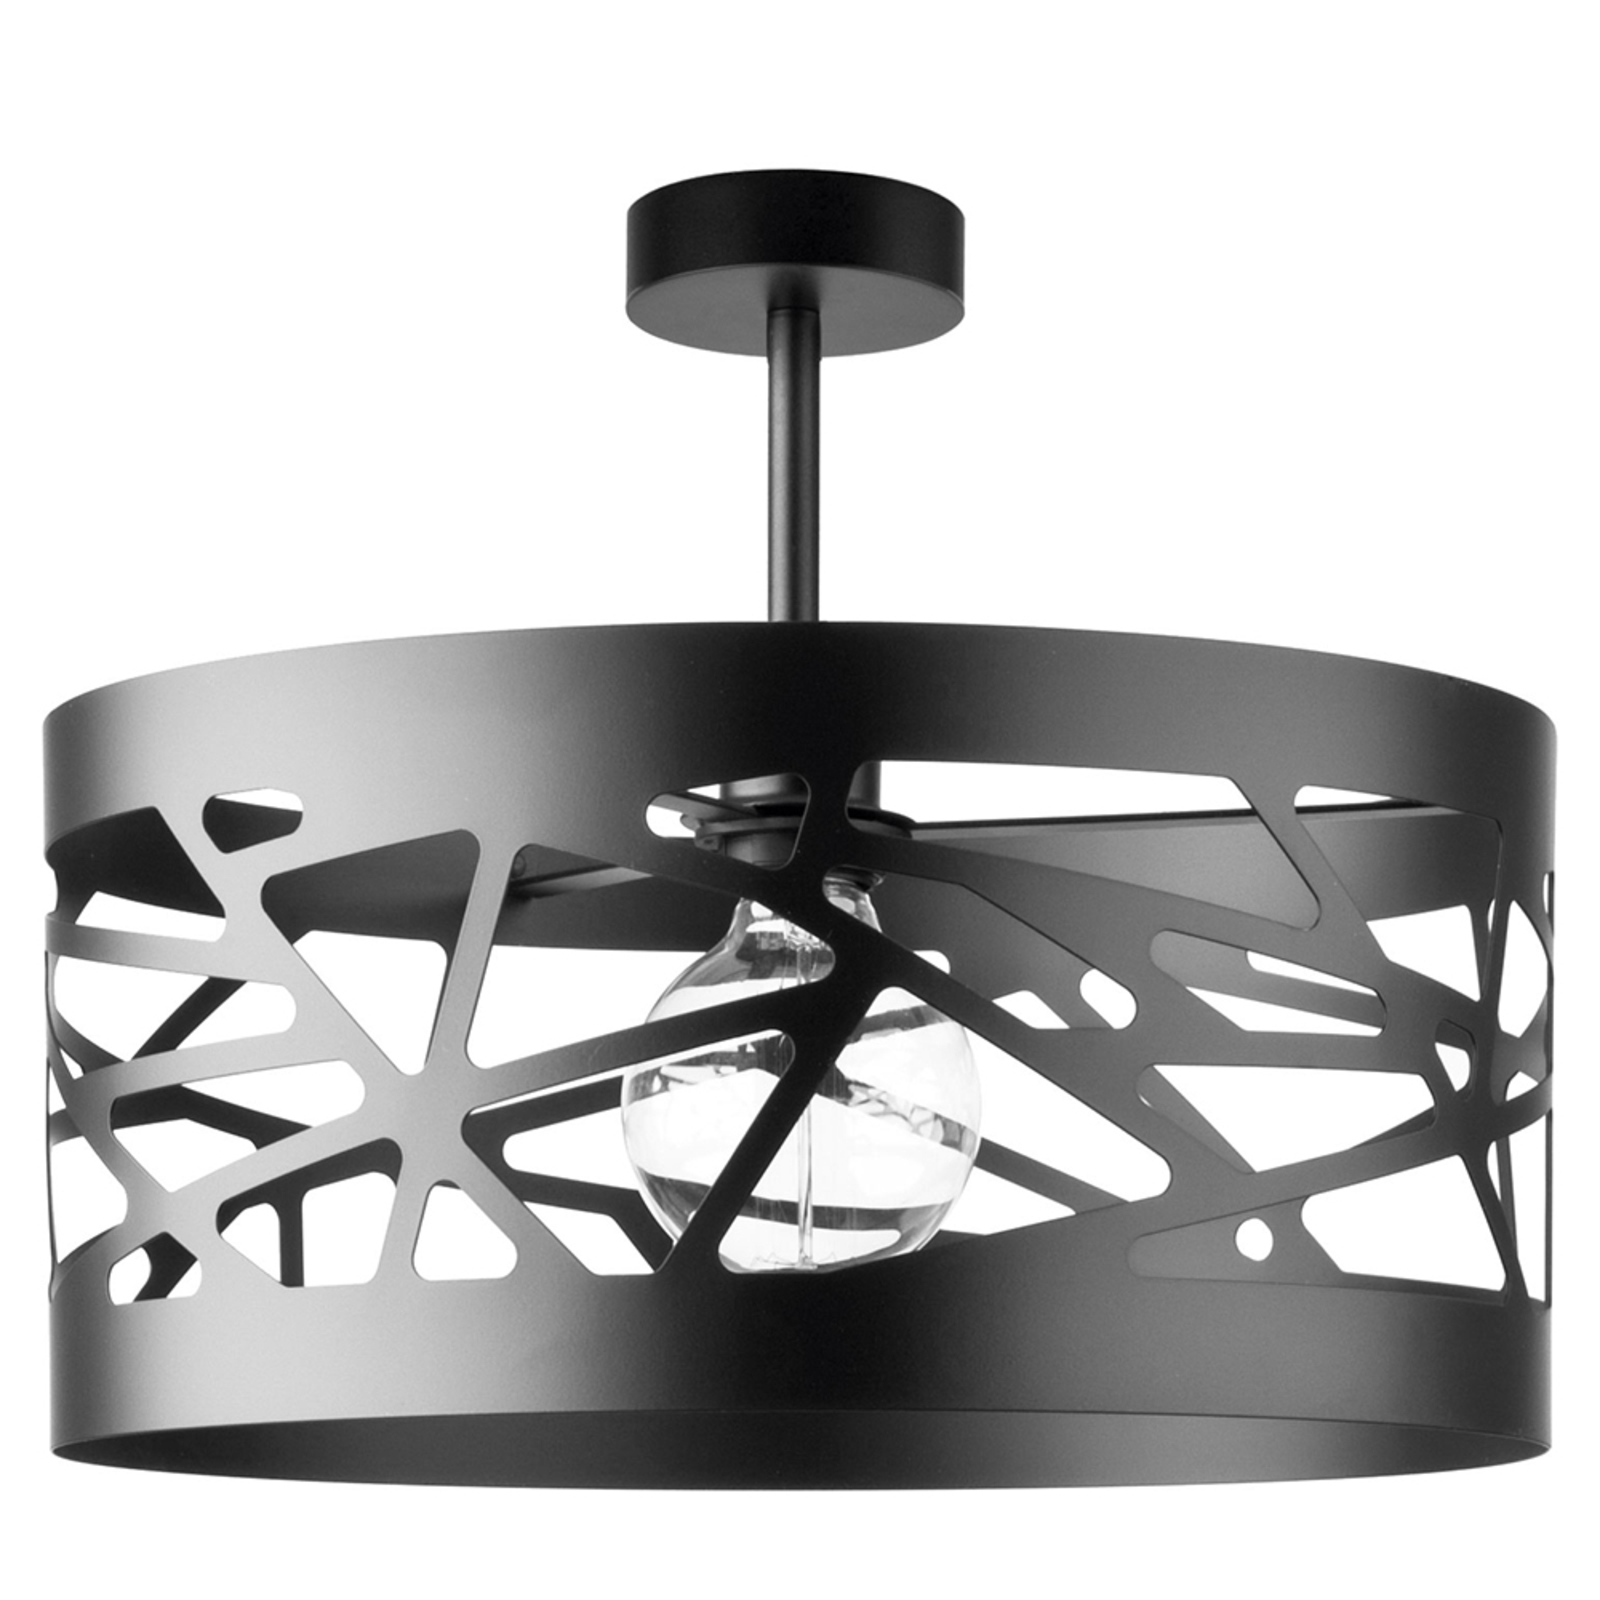 Plafondlamp module Frez voorbeeldkap Ø39cm zwart